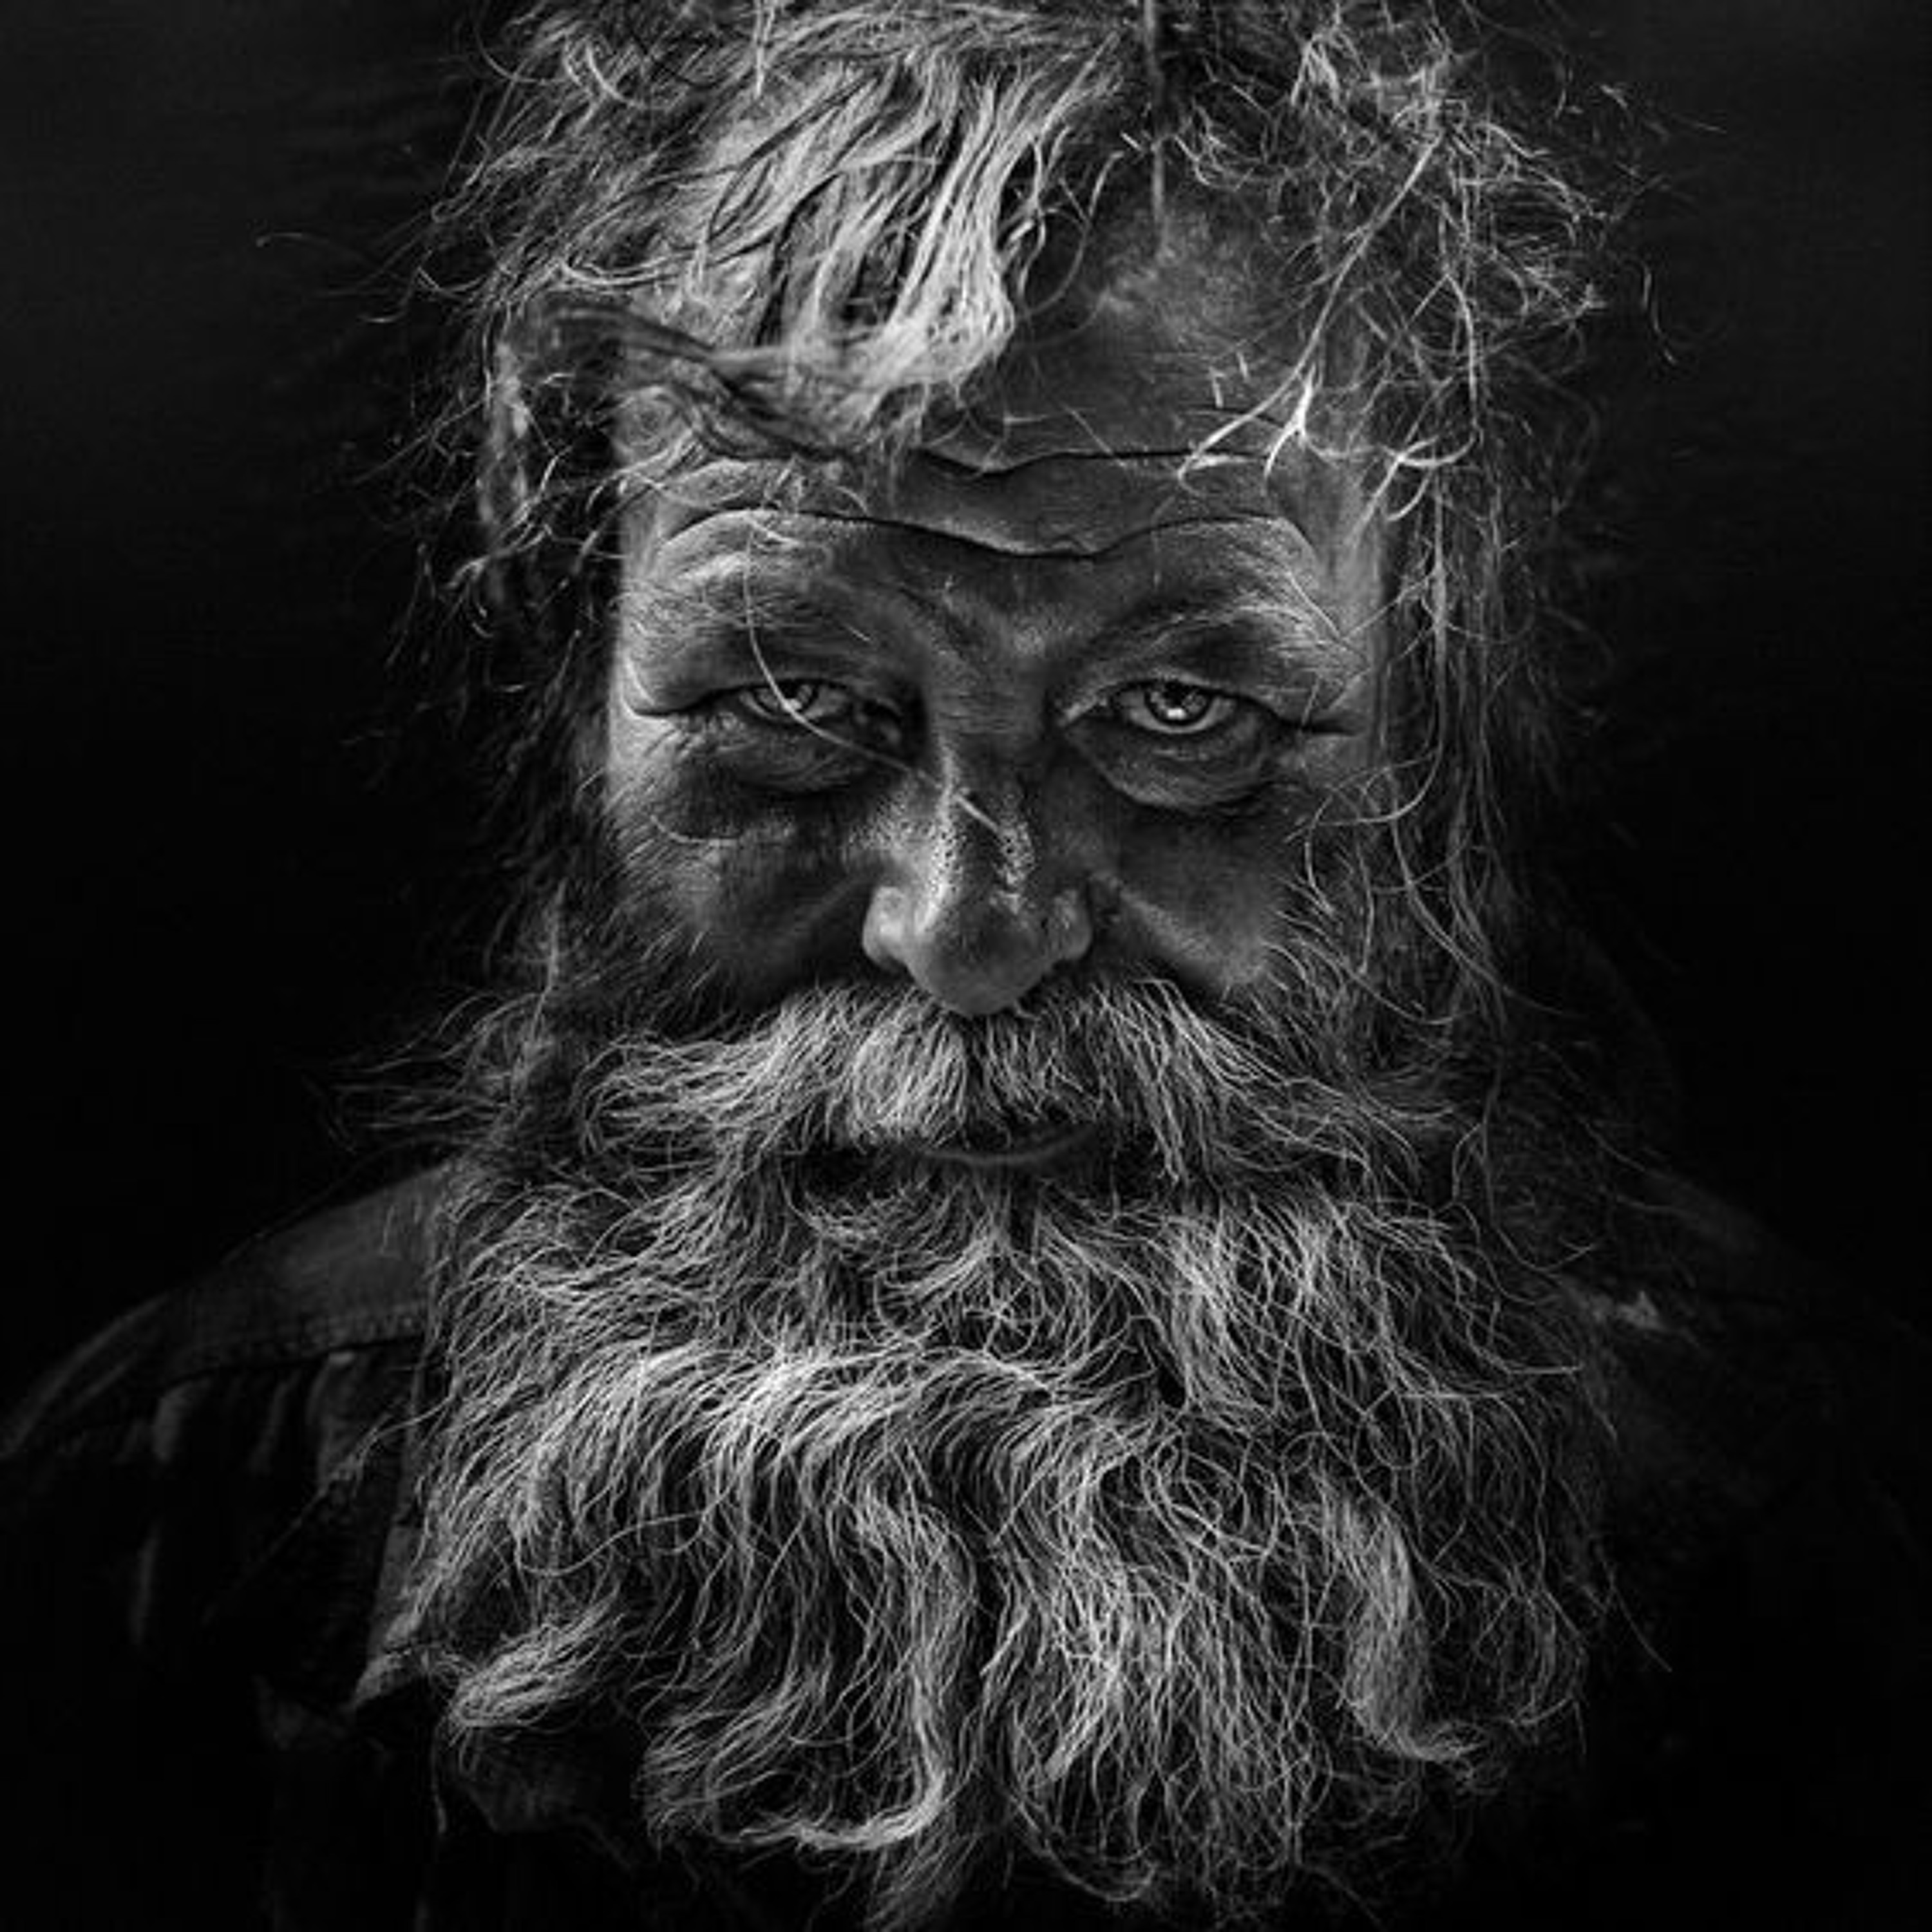 Фотопортрет старика с бородой